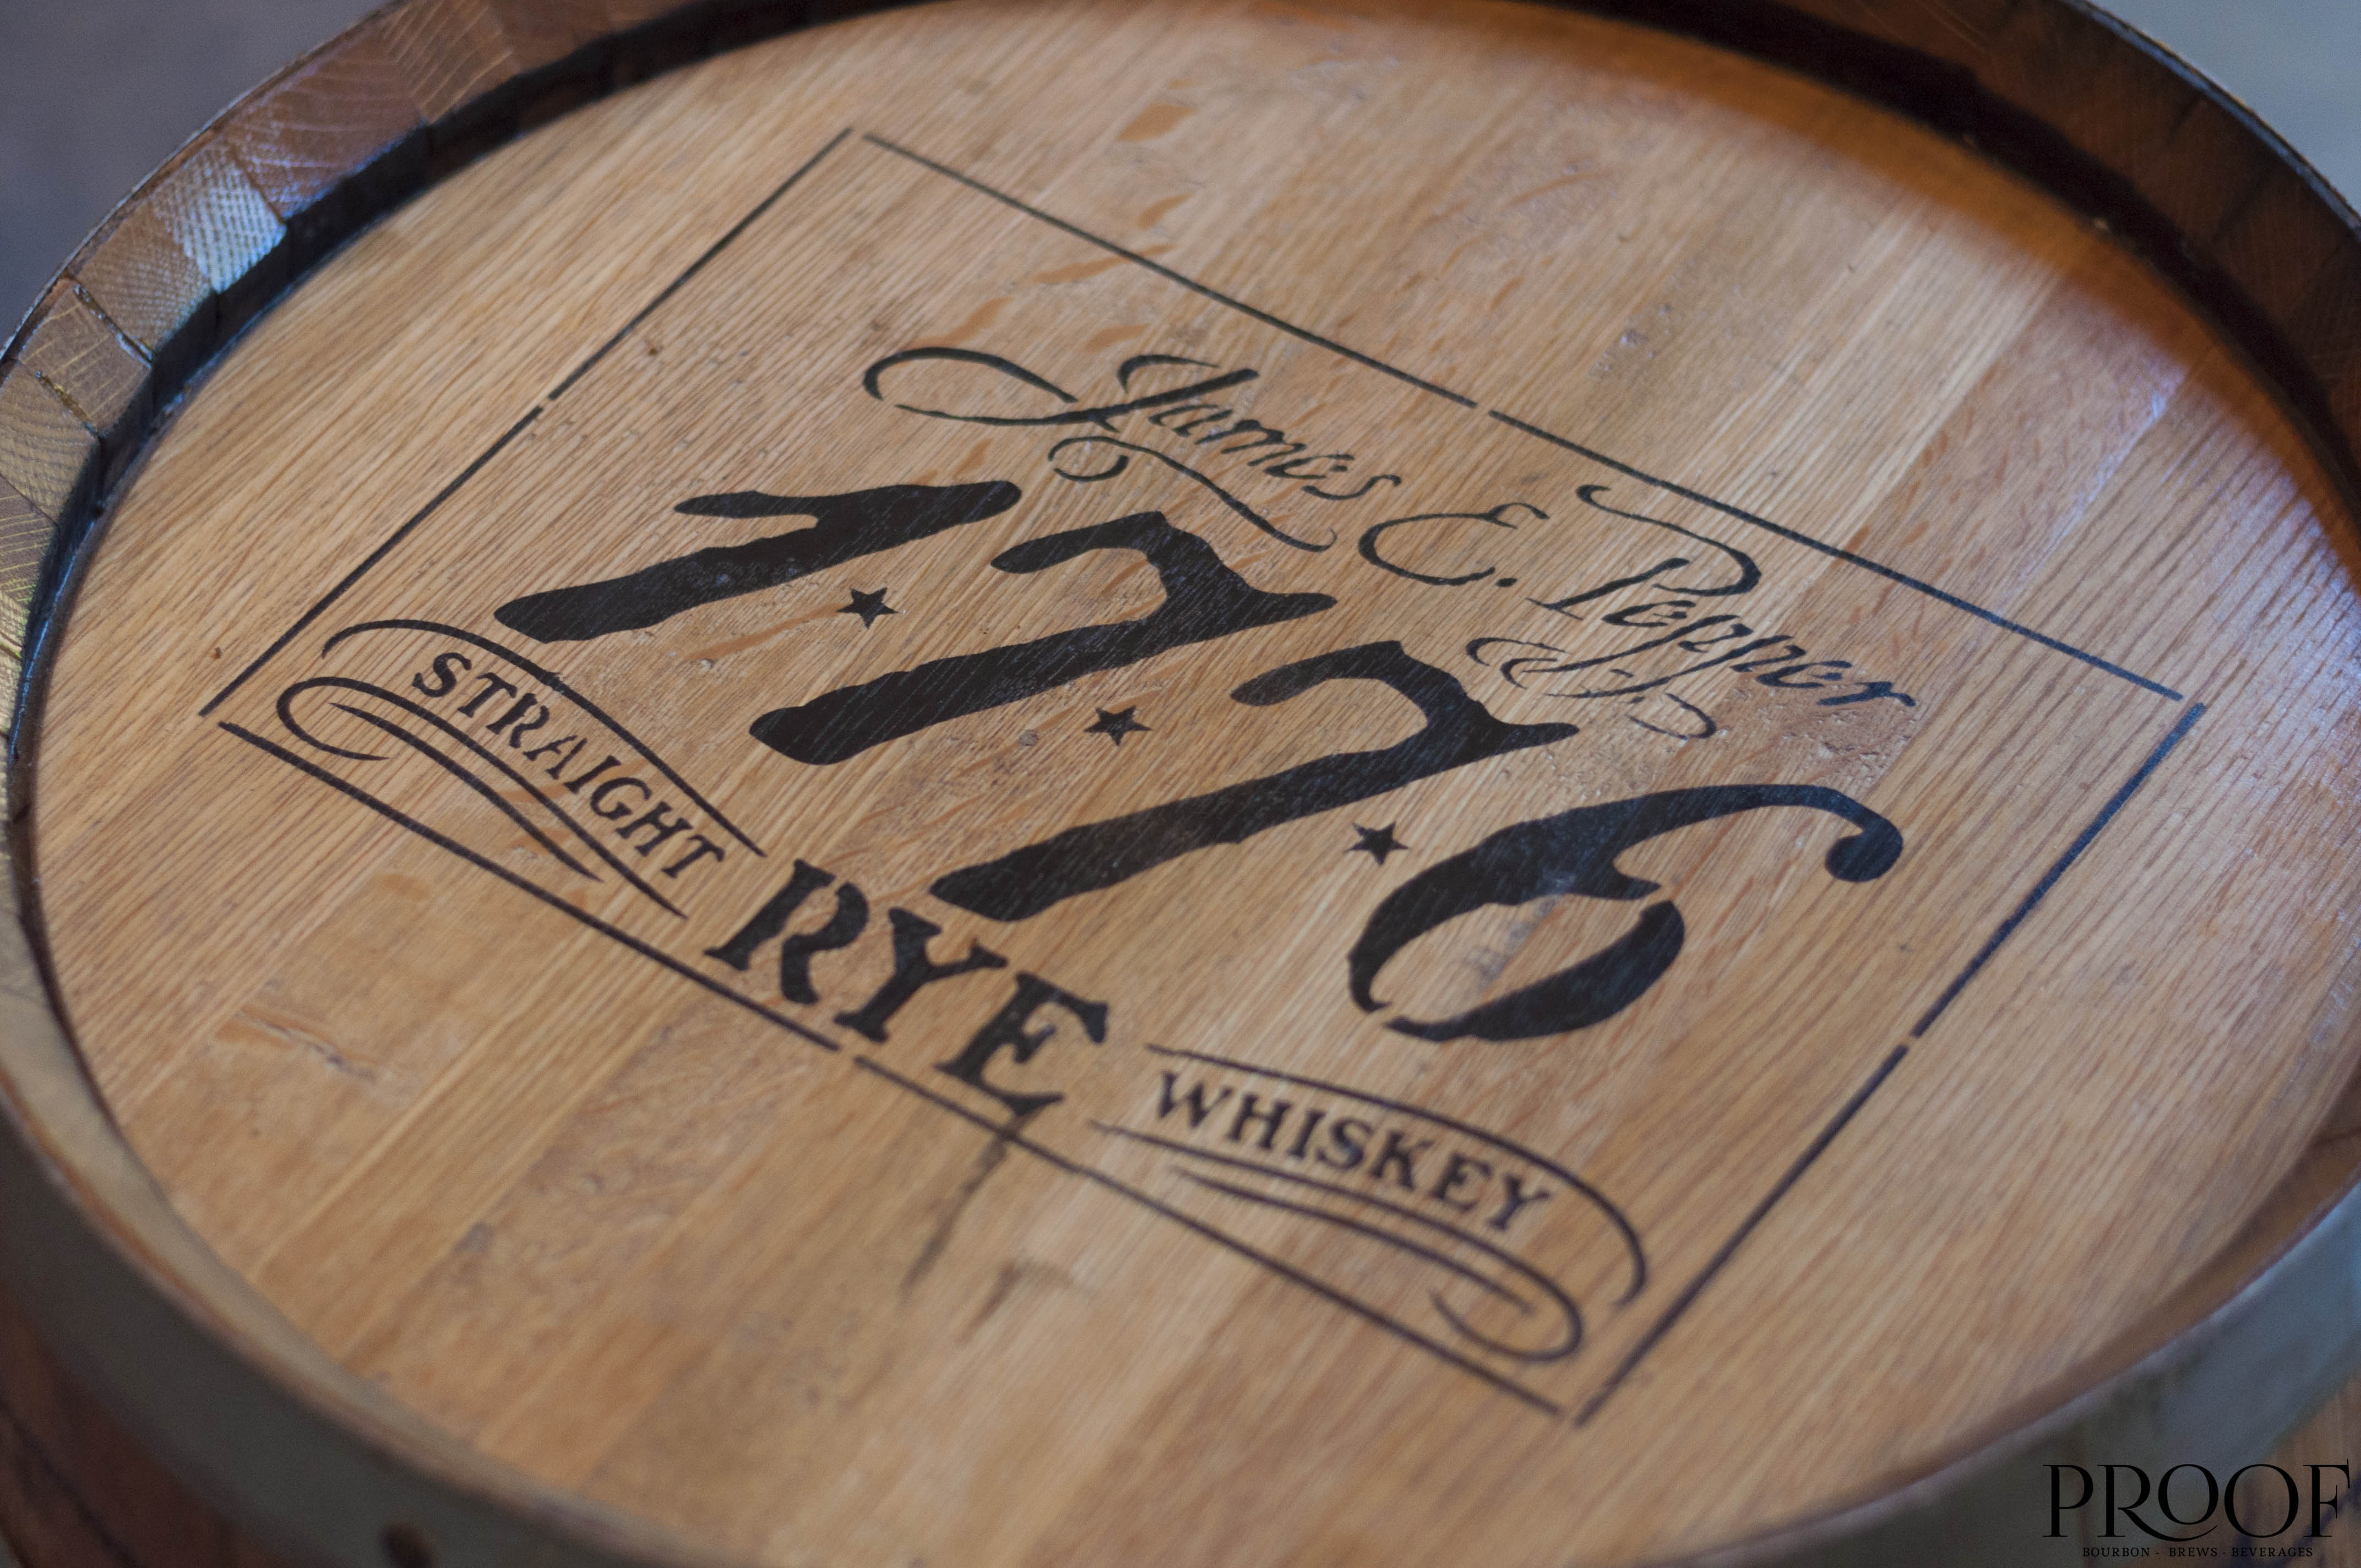 anniversary: bourbon barrel with "james e. pepper 1776 rye" burned into it